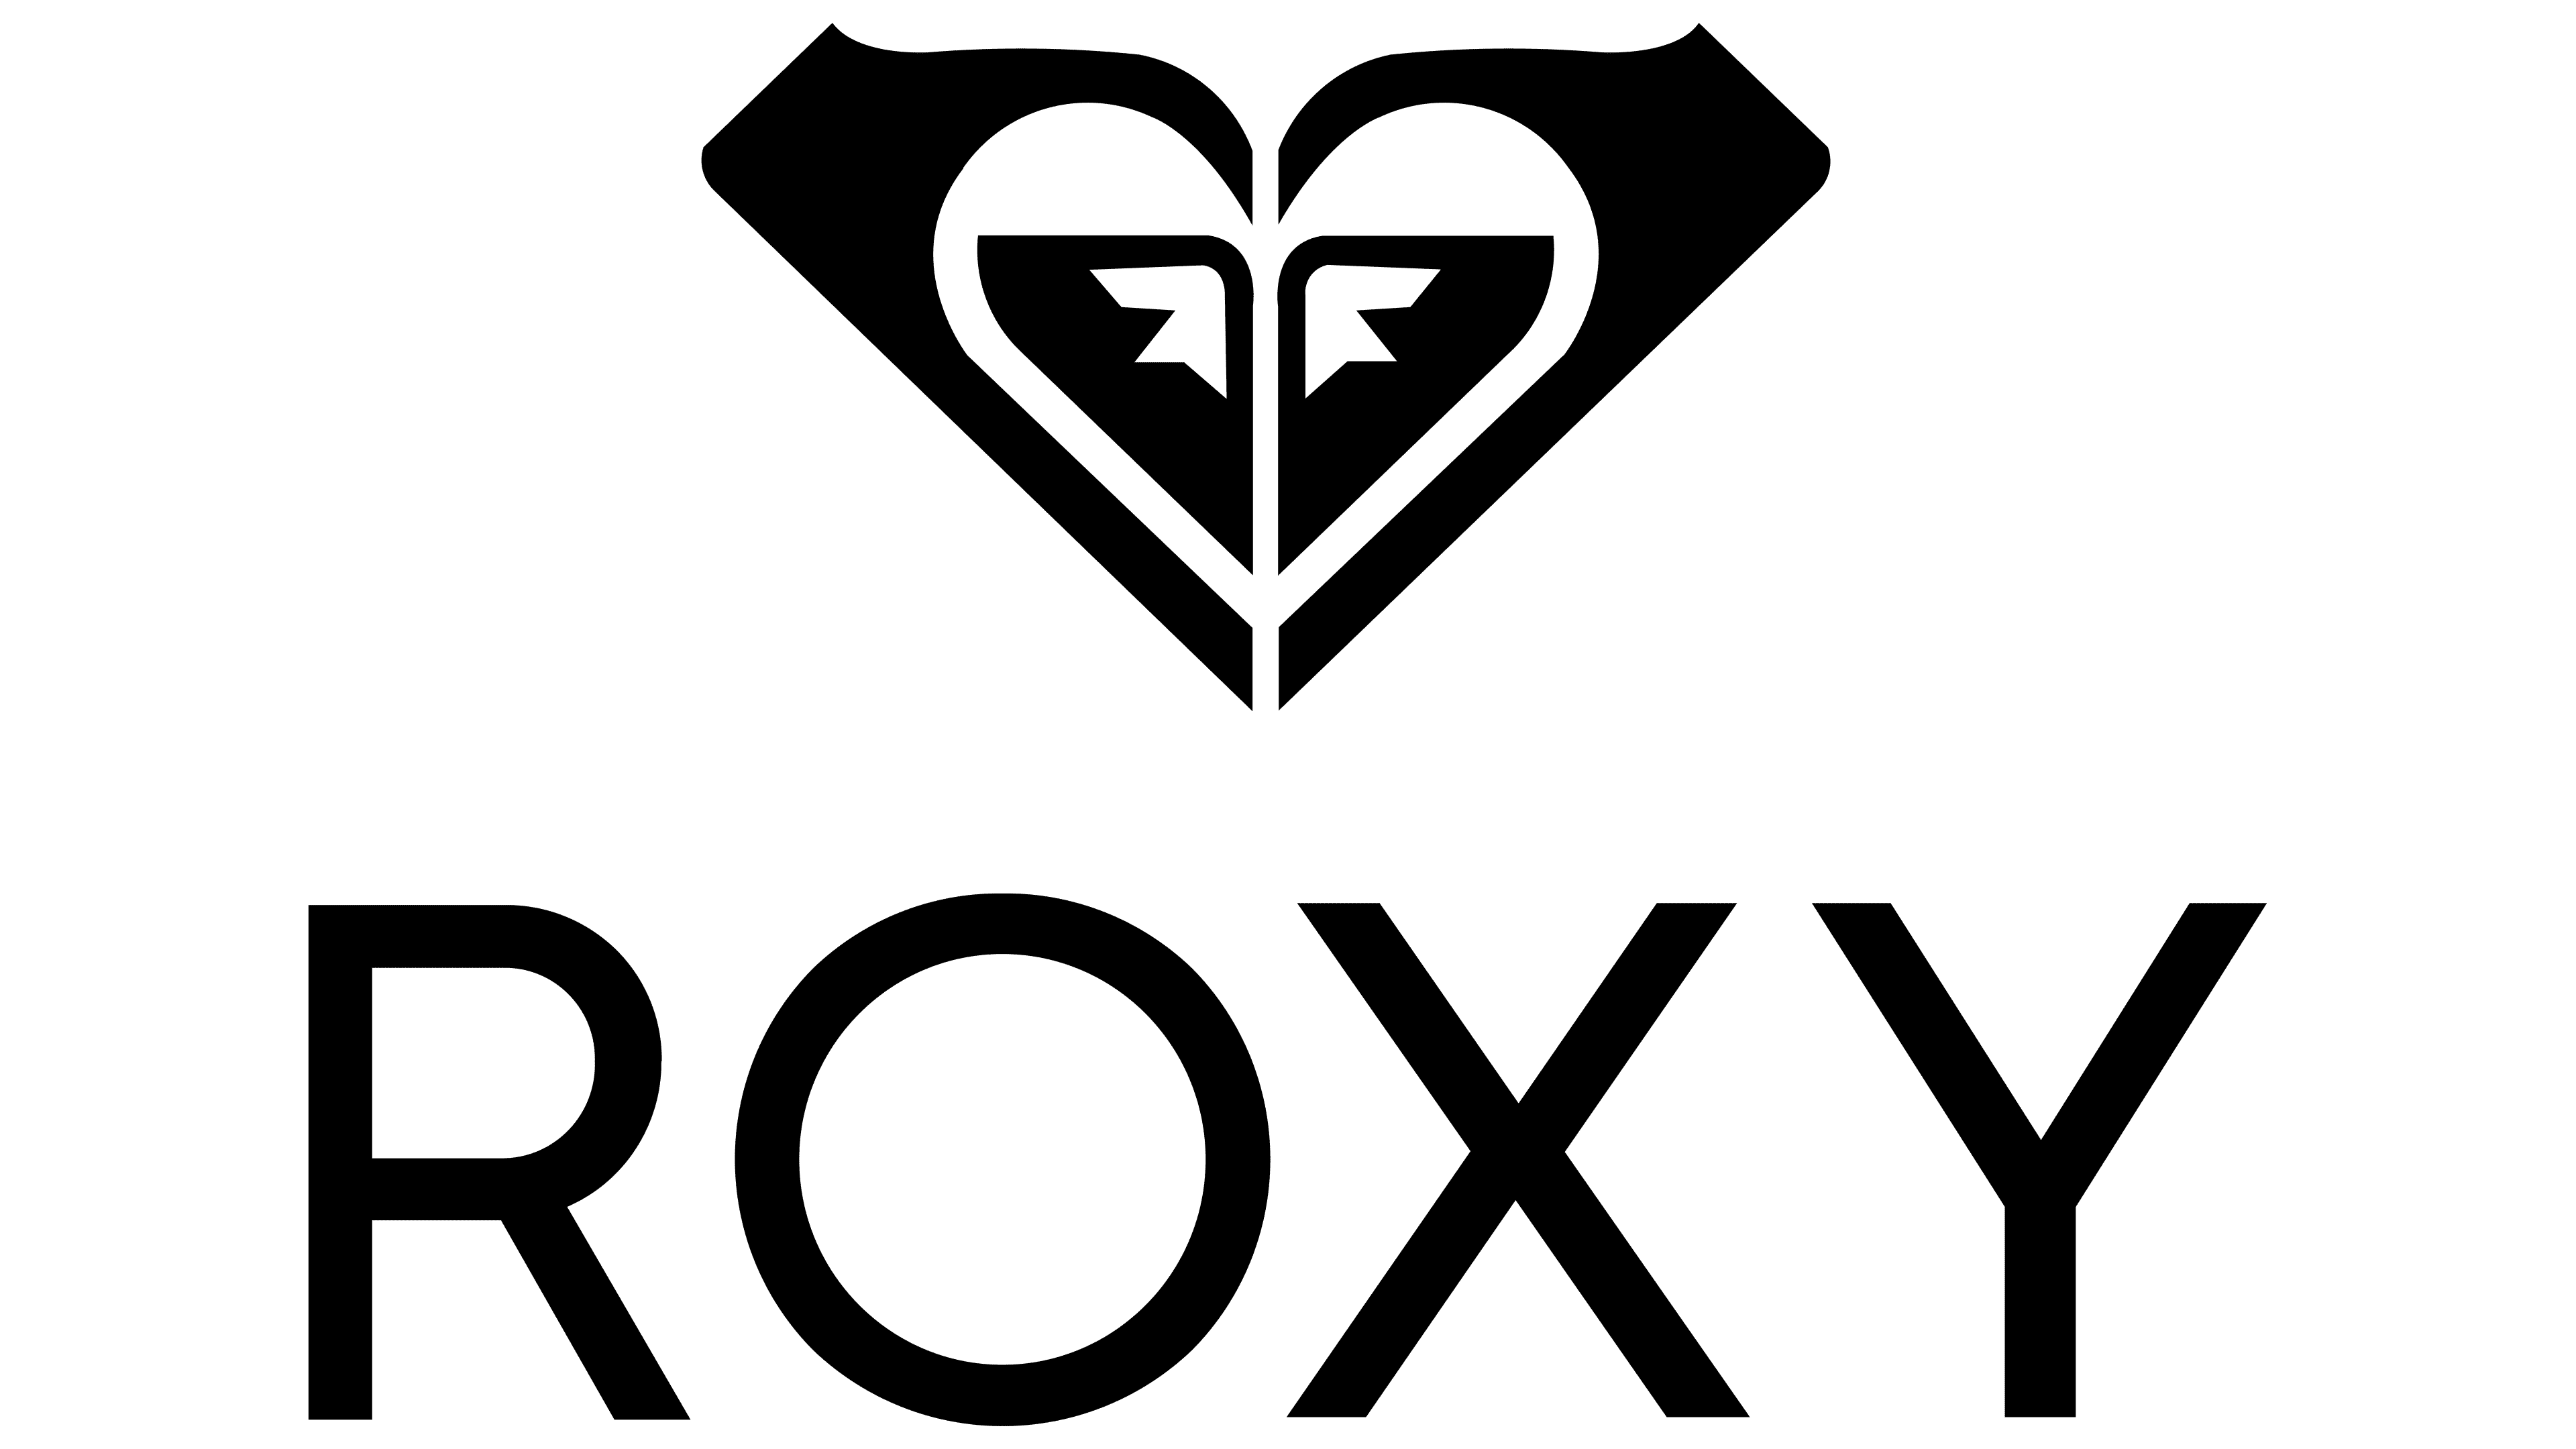 Slovenia, Ljubljana - March 6 2022: Roxy logo on building. Stock Photo |  Adobe Stock